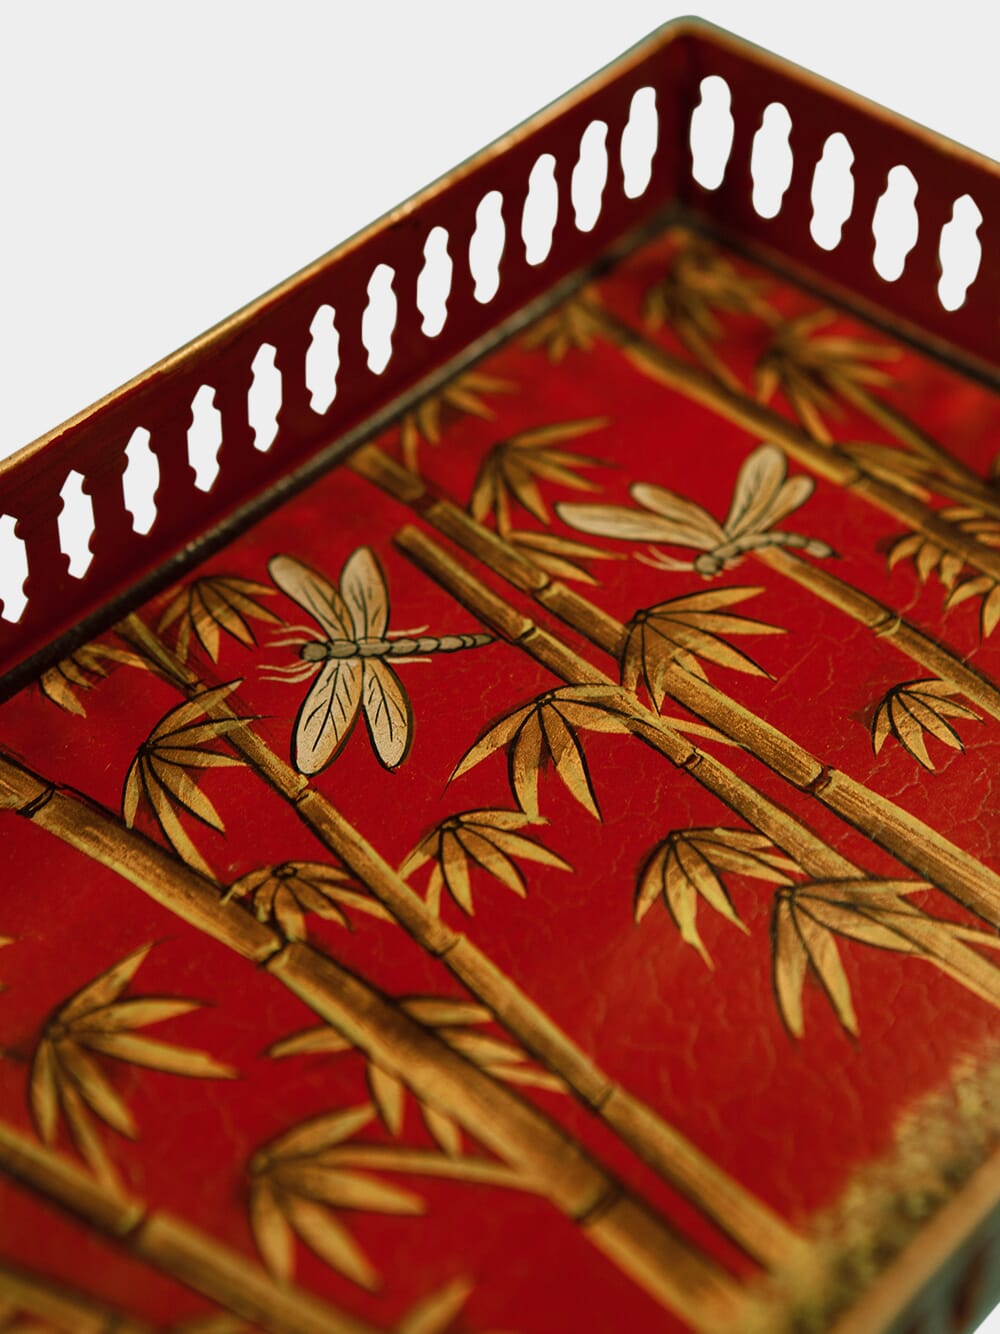 Les OttomansFlora iron tray Bamboo 23cm at Fashion Clinic